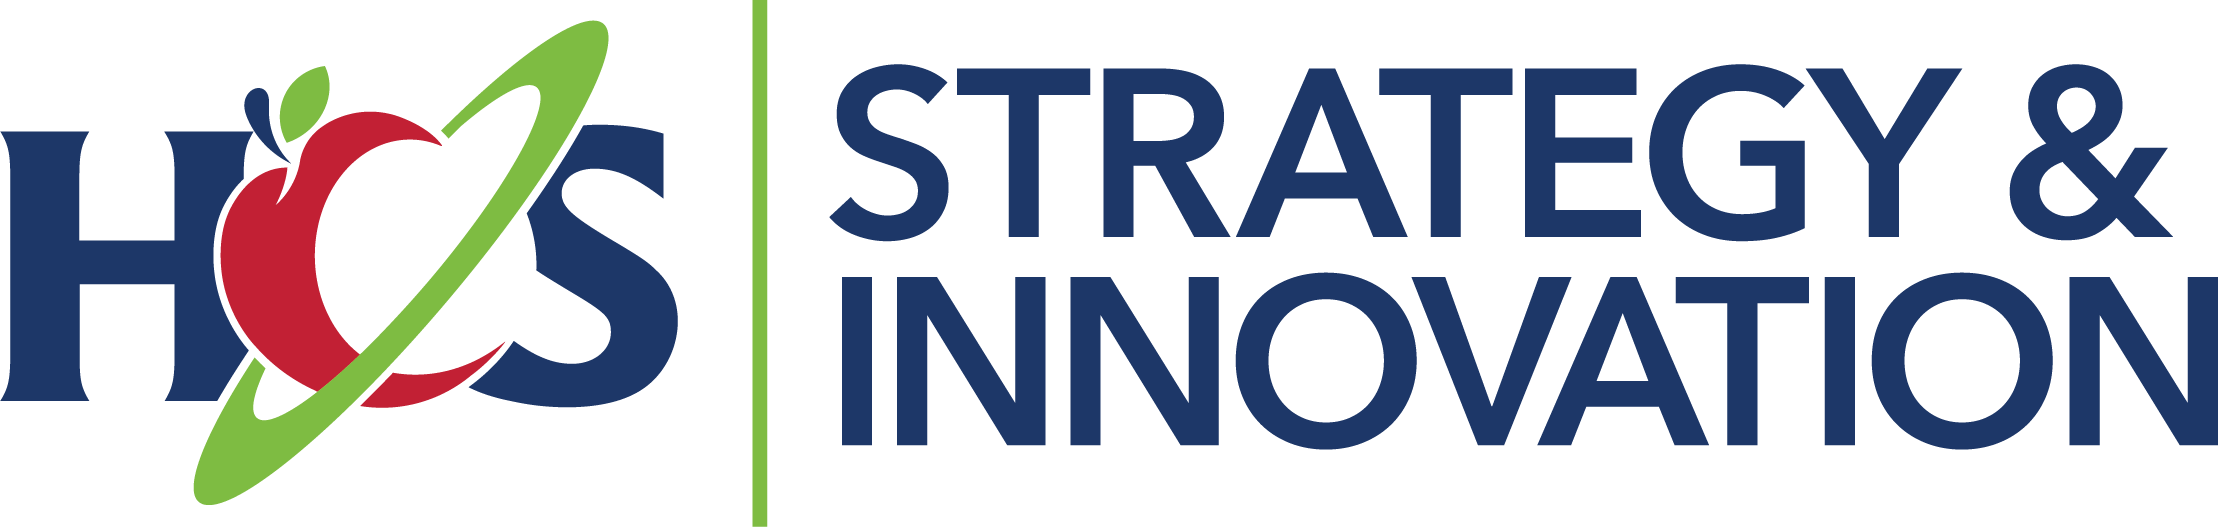 HCS Strategy & Innovation Logo